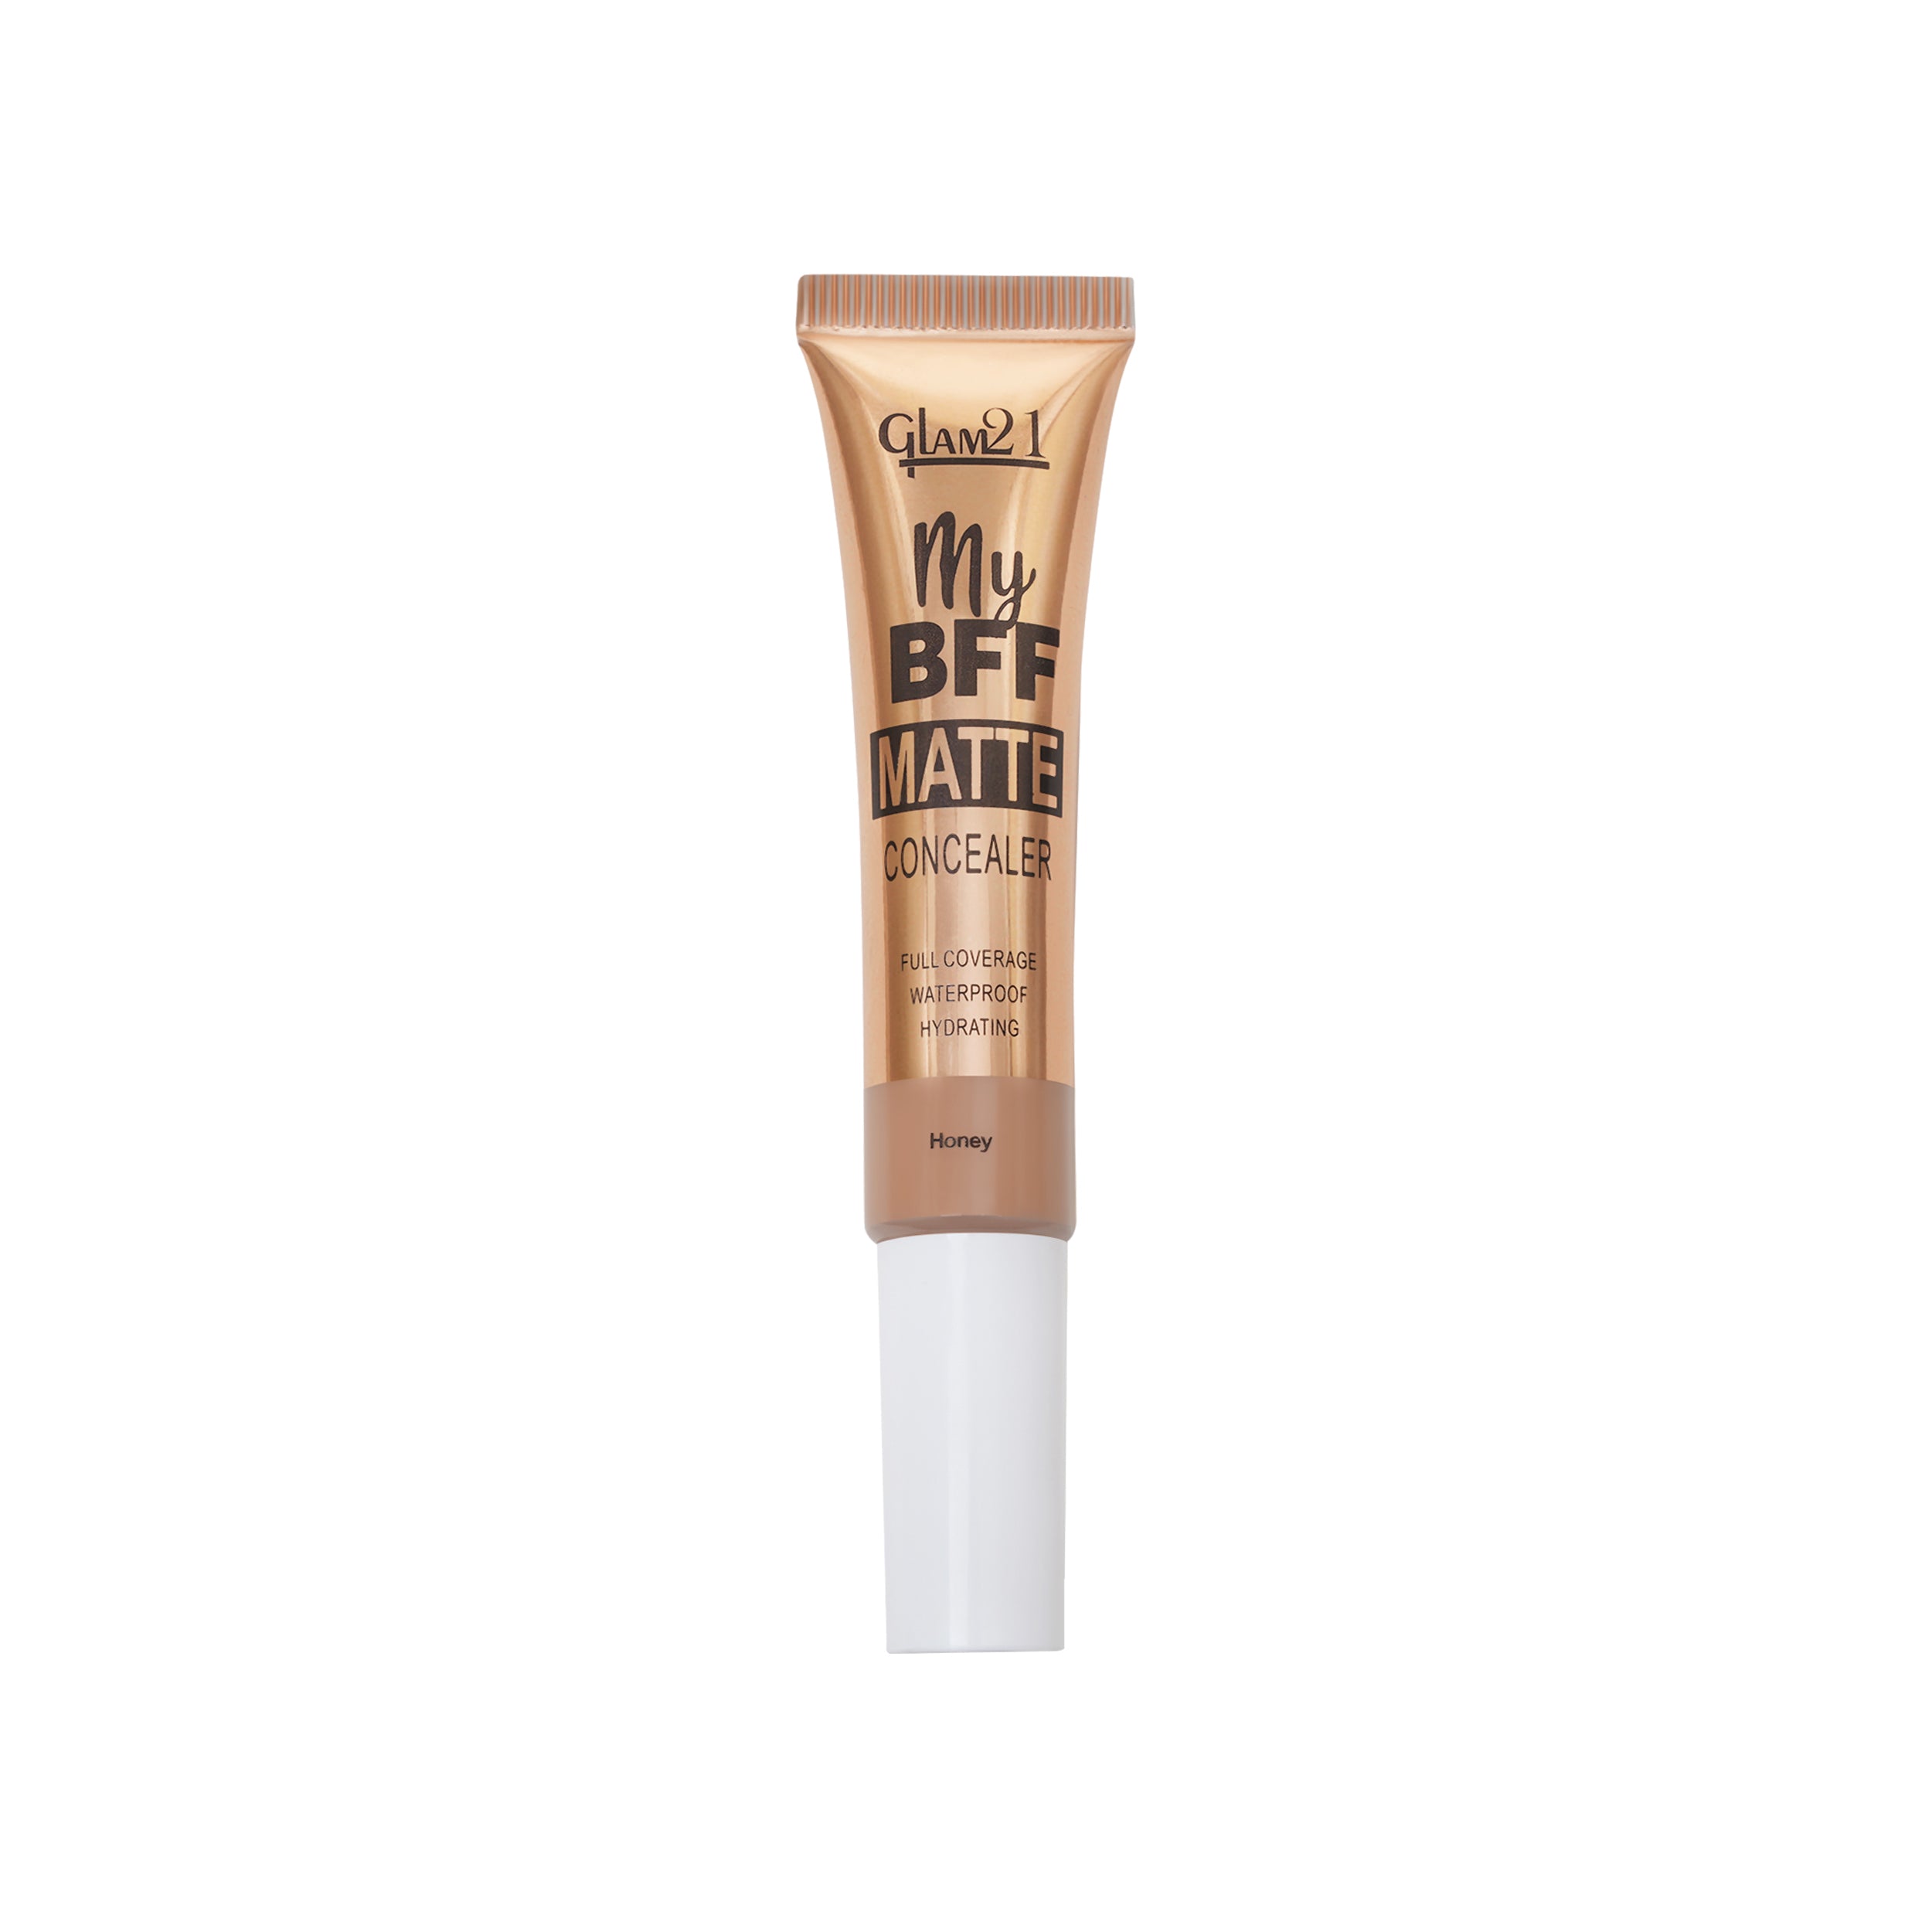 Glam21 My BFF Matte Liquid Concealer-Conceal,Contour,&Highlights Your Face|Matte Finish Concealer (Honey, 8 g)